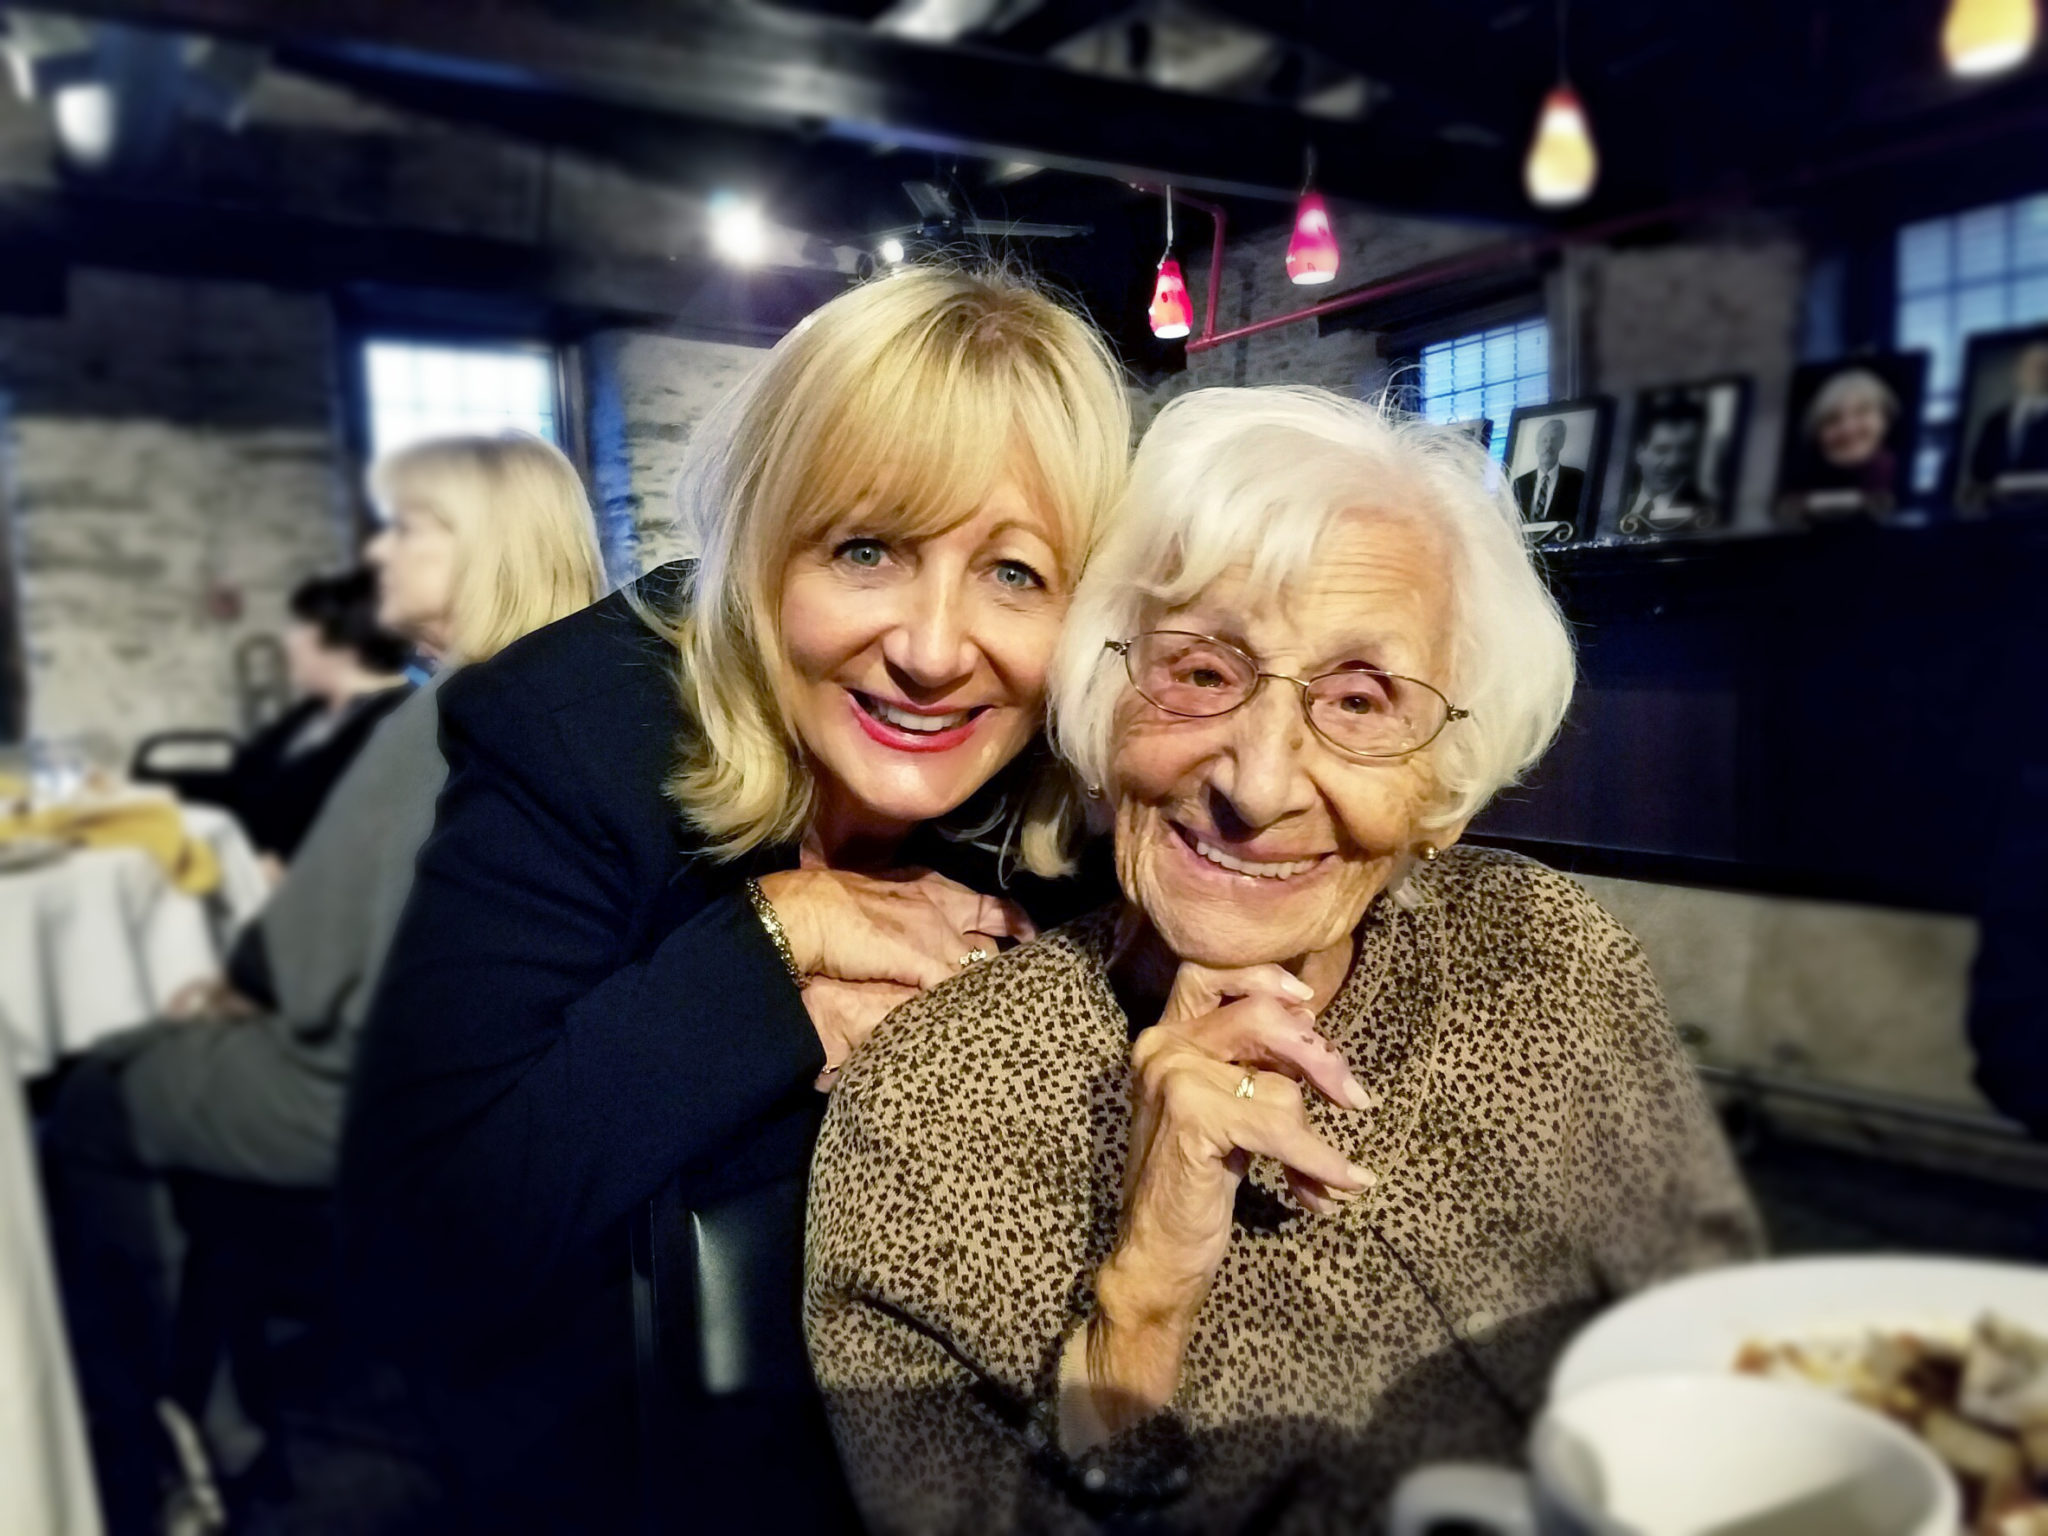 Daughter embracing her elderly mother at a restaurant